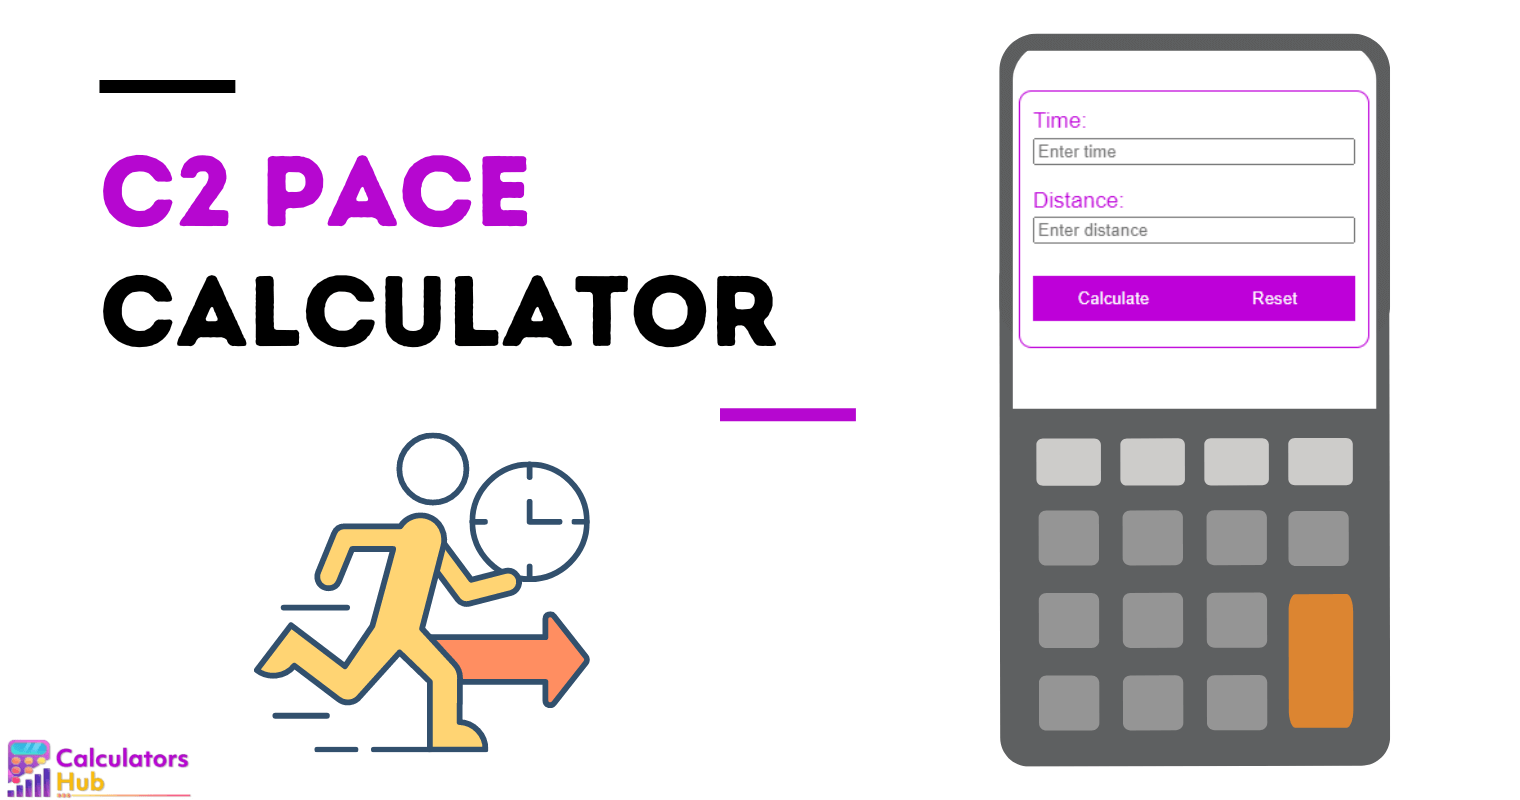 C2 Pace calculator